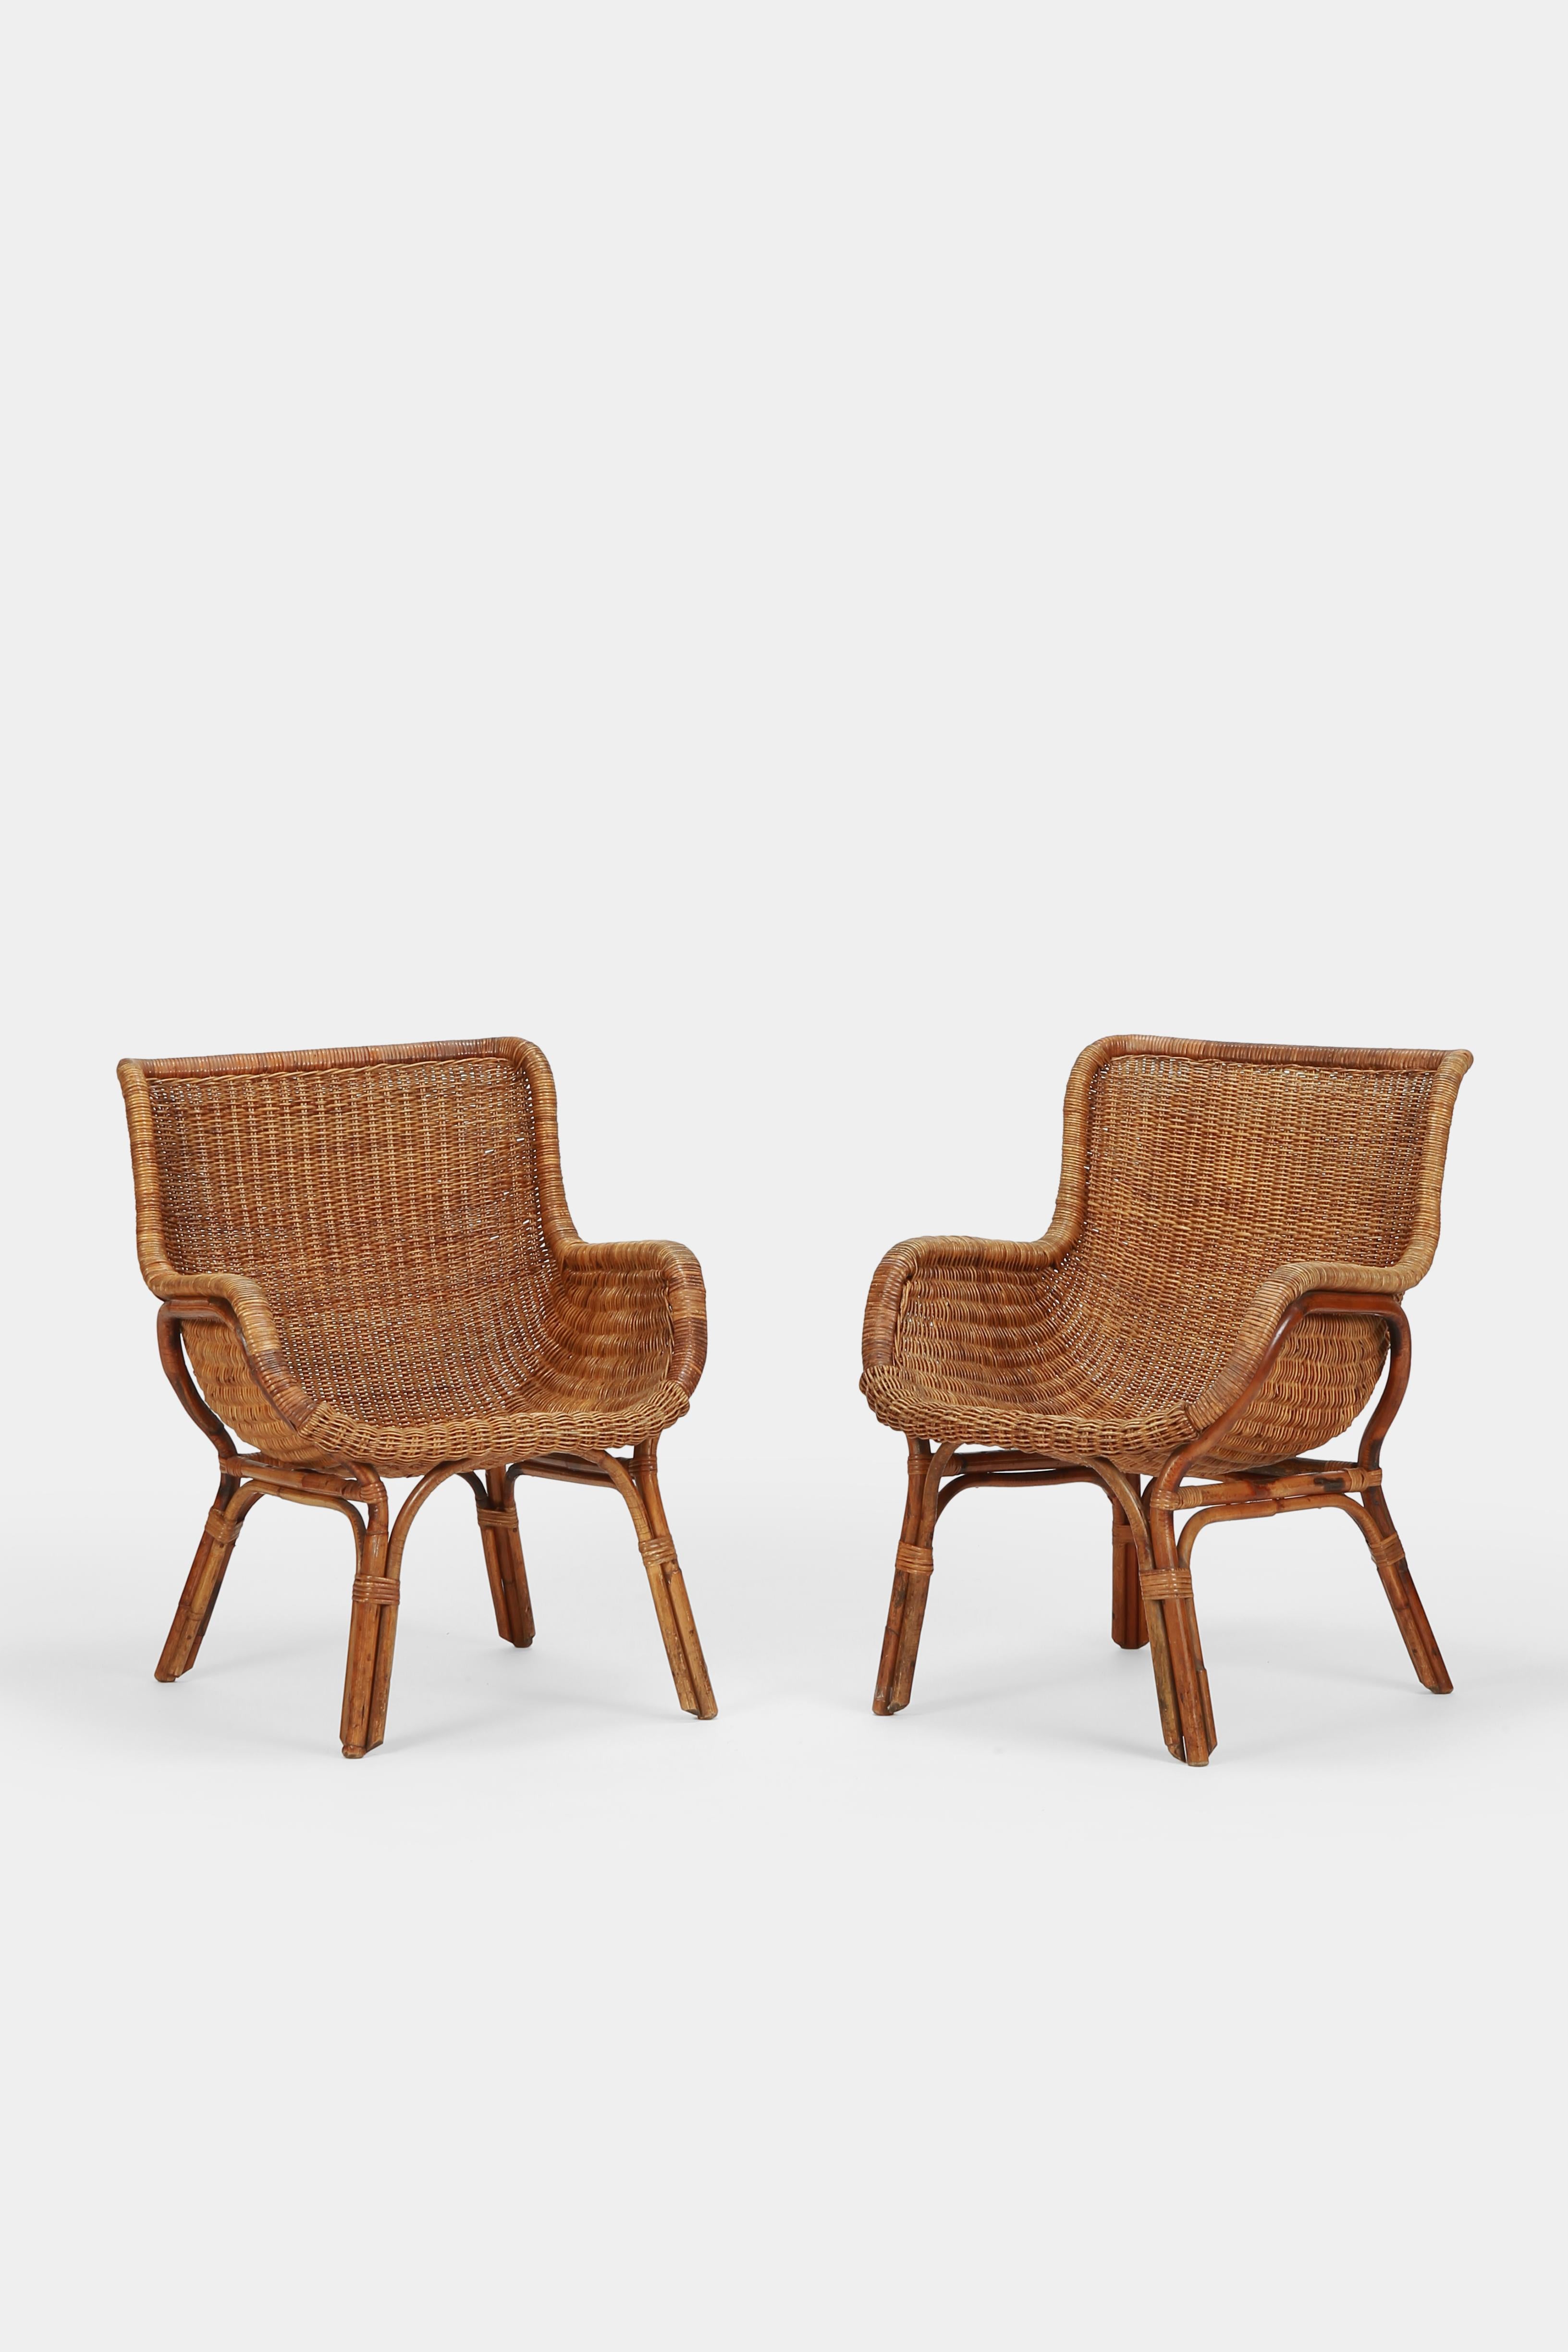 Italian Two Bonacina Bamboo Chairs Italy, 1950s